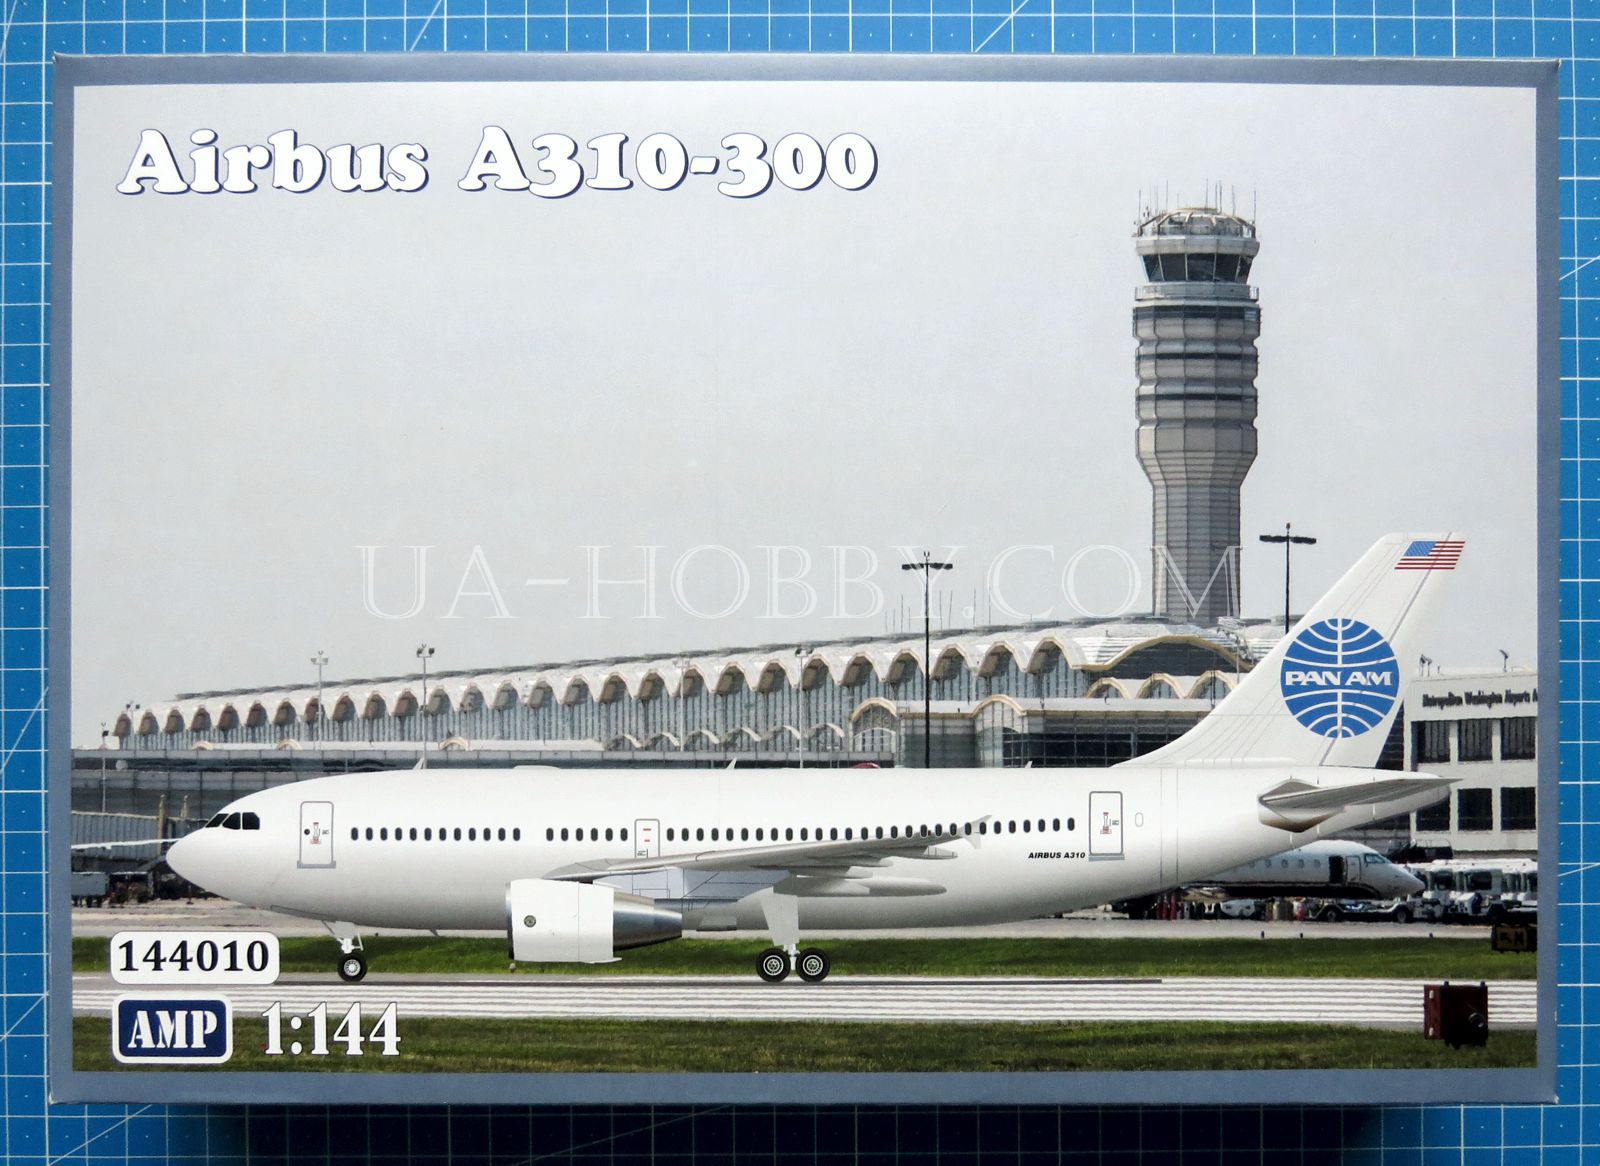 1/144 Airbus A310-300 PAN AM. AMP 144010 – UA-hobby